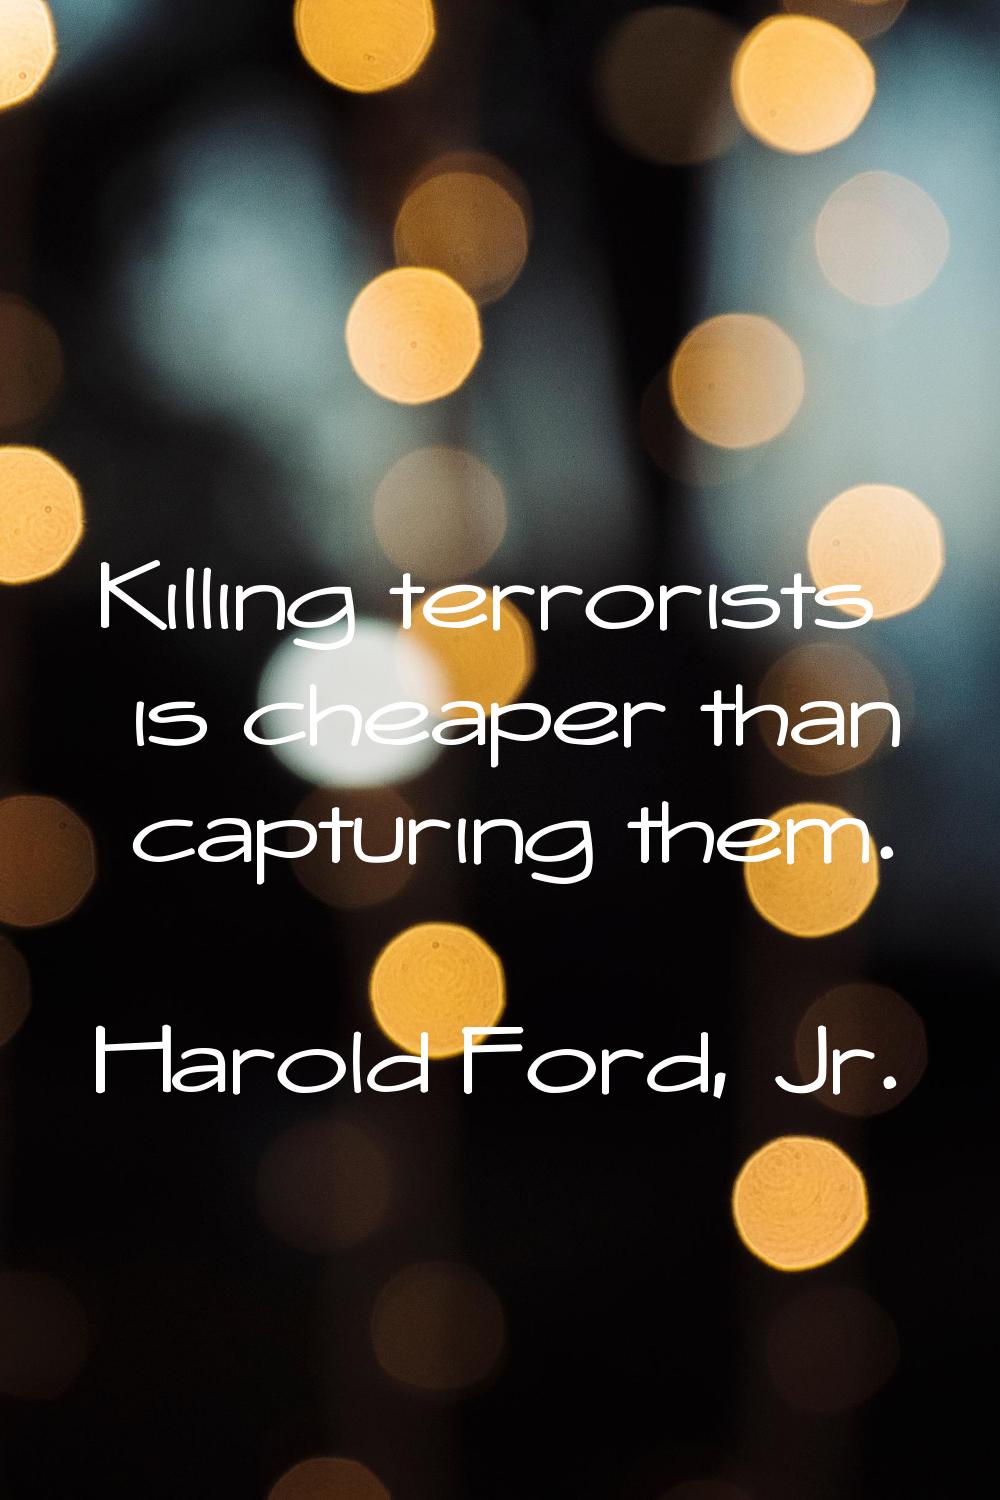 Killing terrorists is cheaper than capturing them.